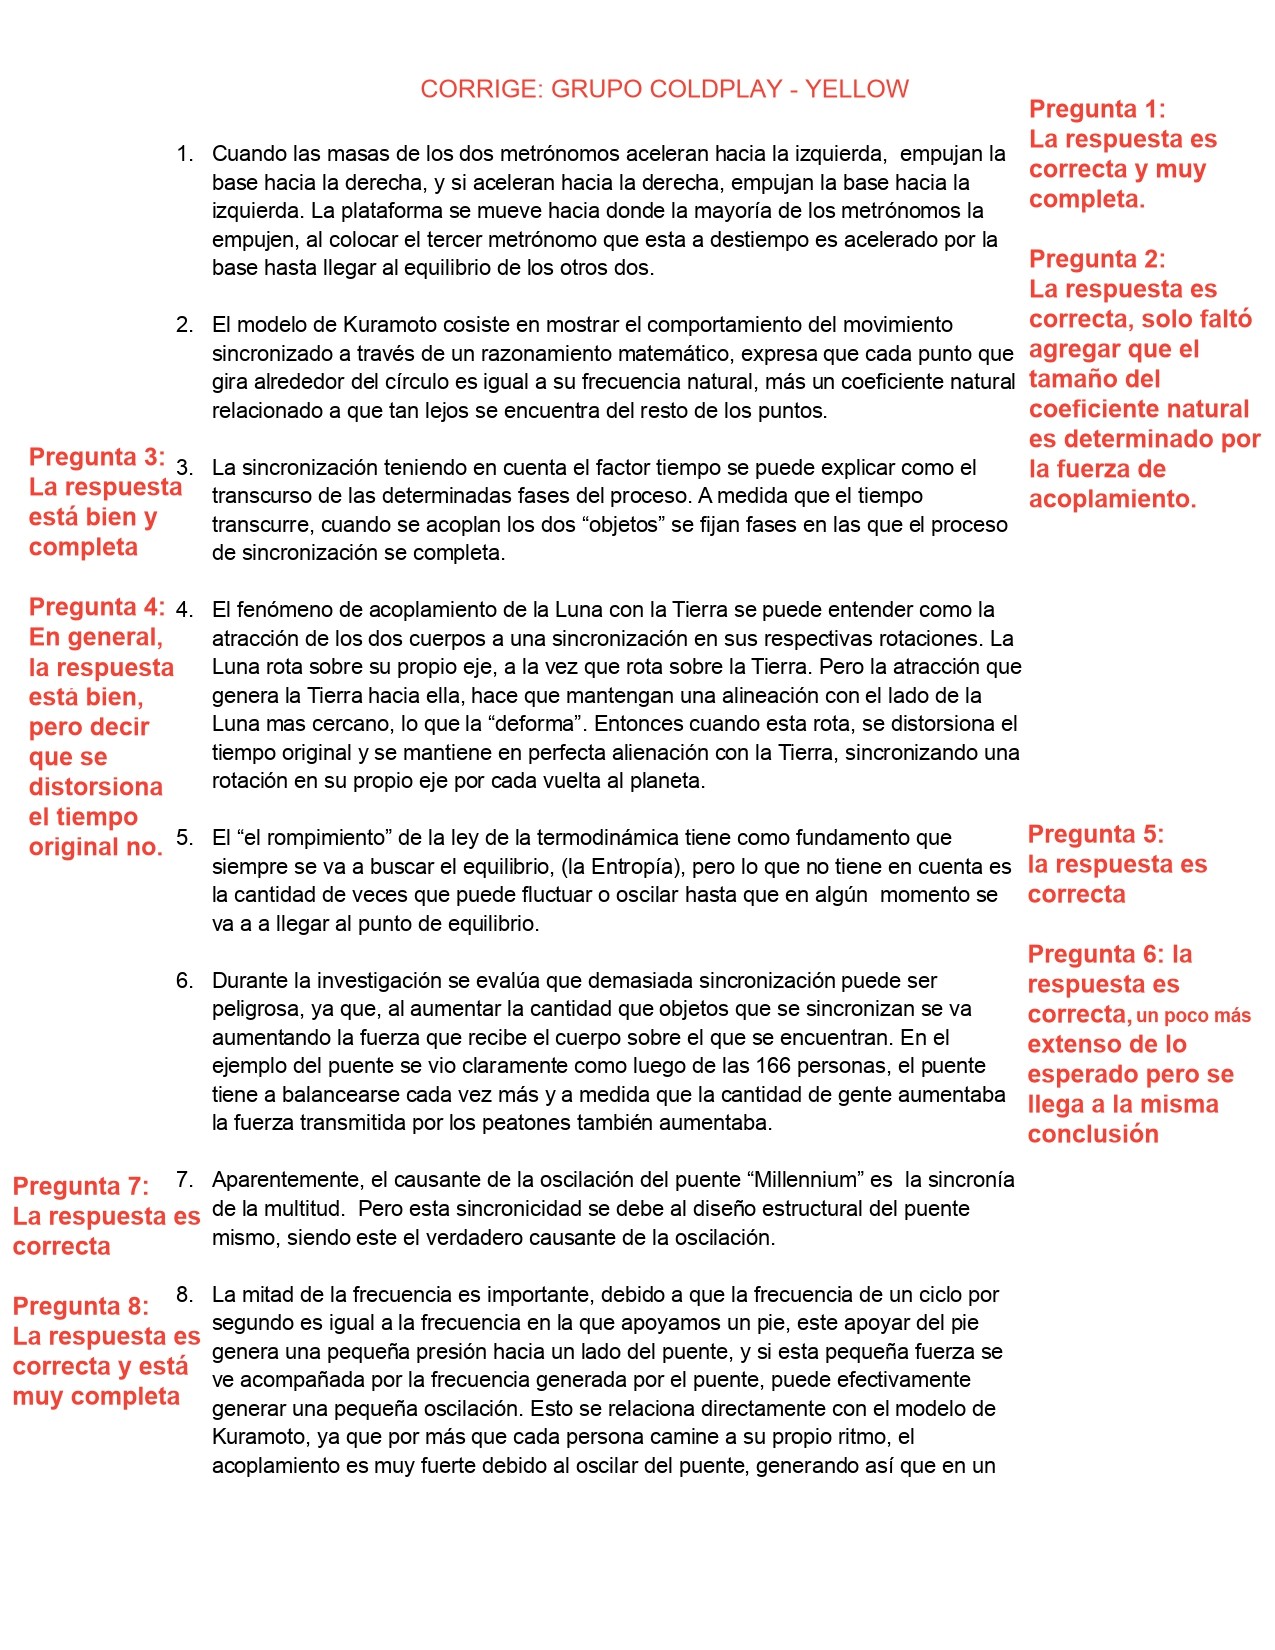 TRABAJO_N3.pdf_(1)(1)(1)_(1)_page-0001[1].jpg